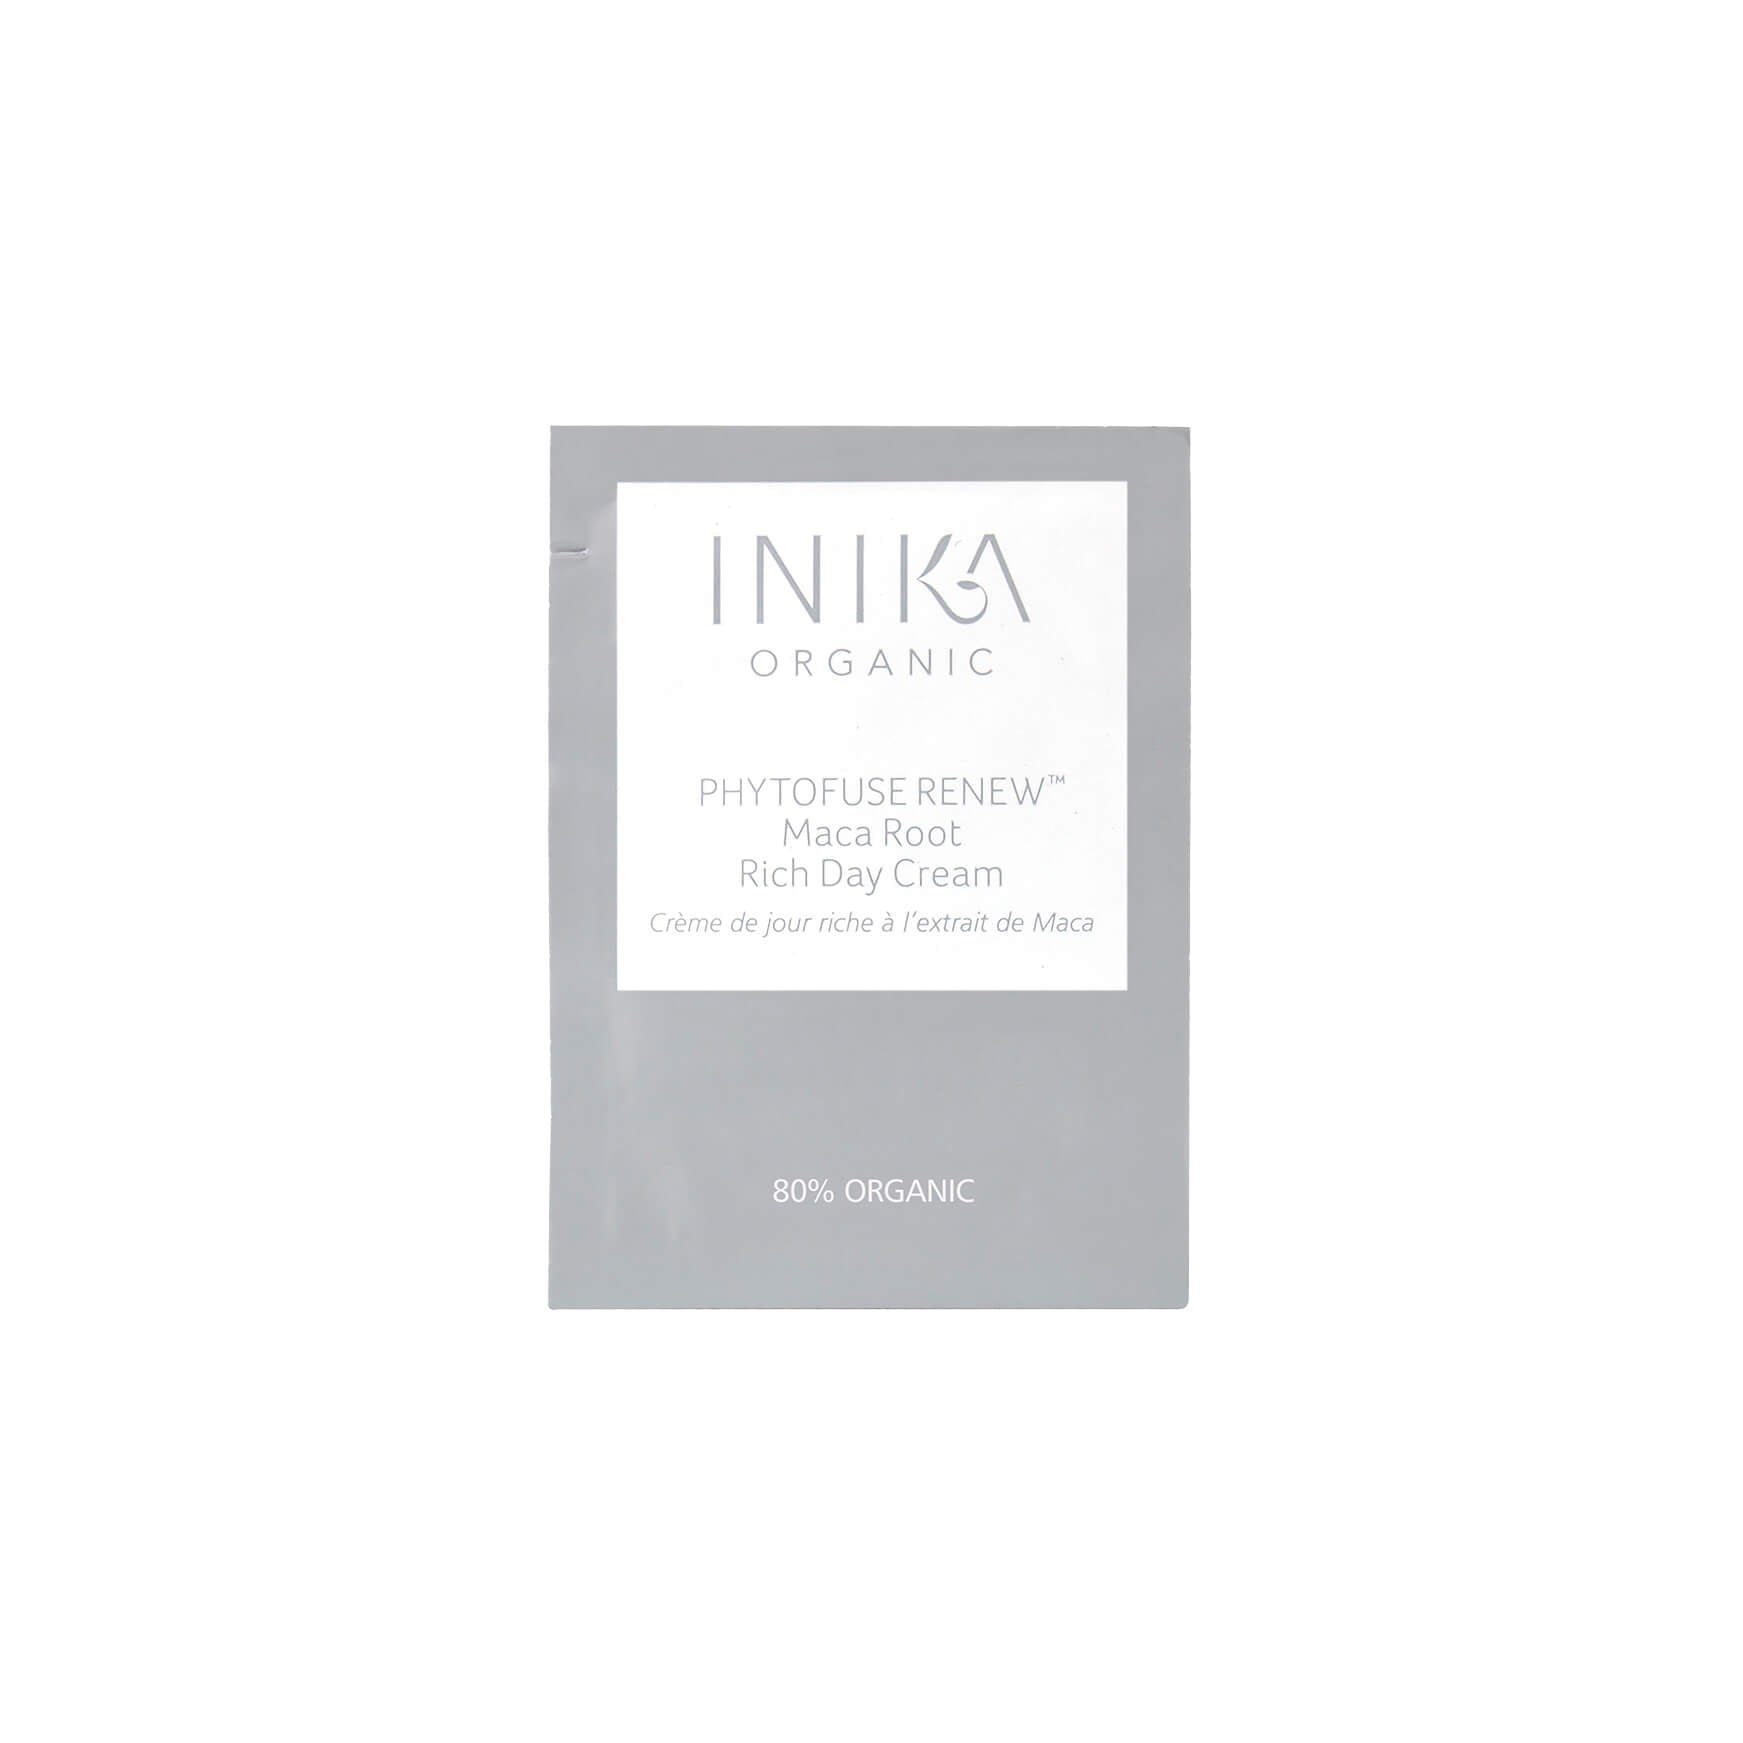 Rich Day Cream 1.5ml (Sample) | INIKA Organic | 01